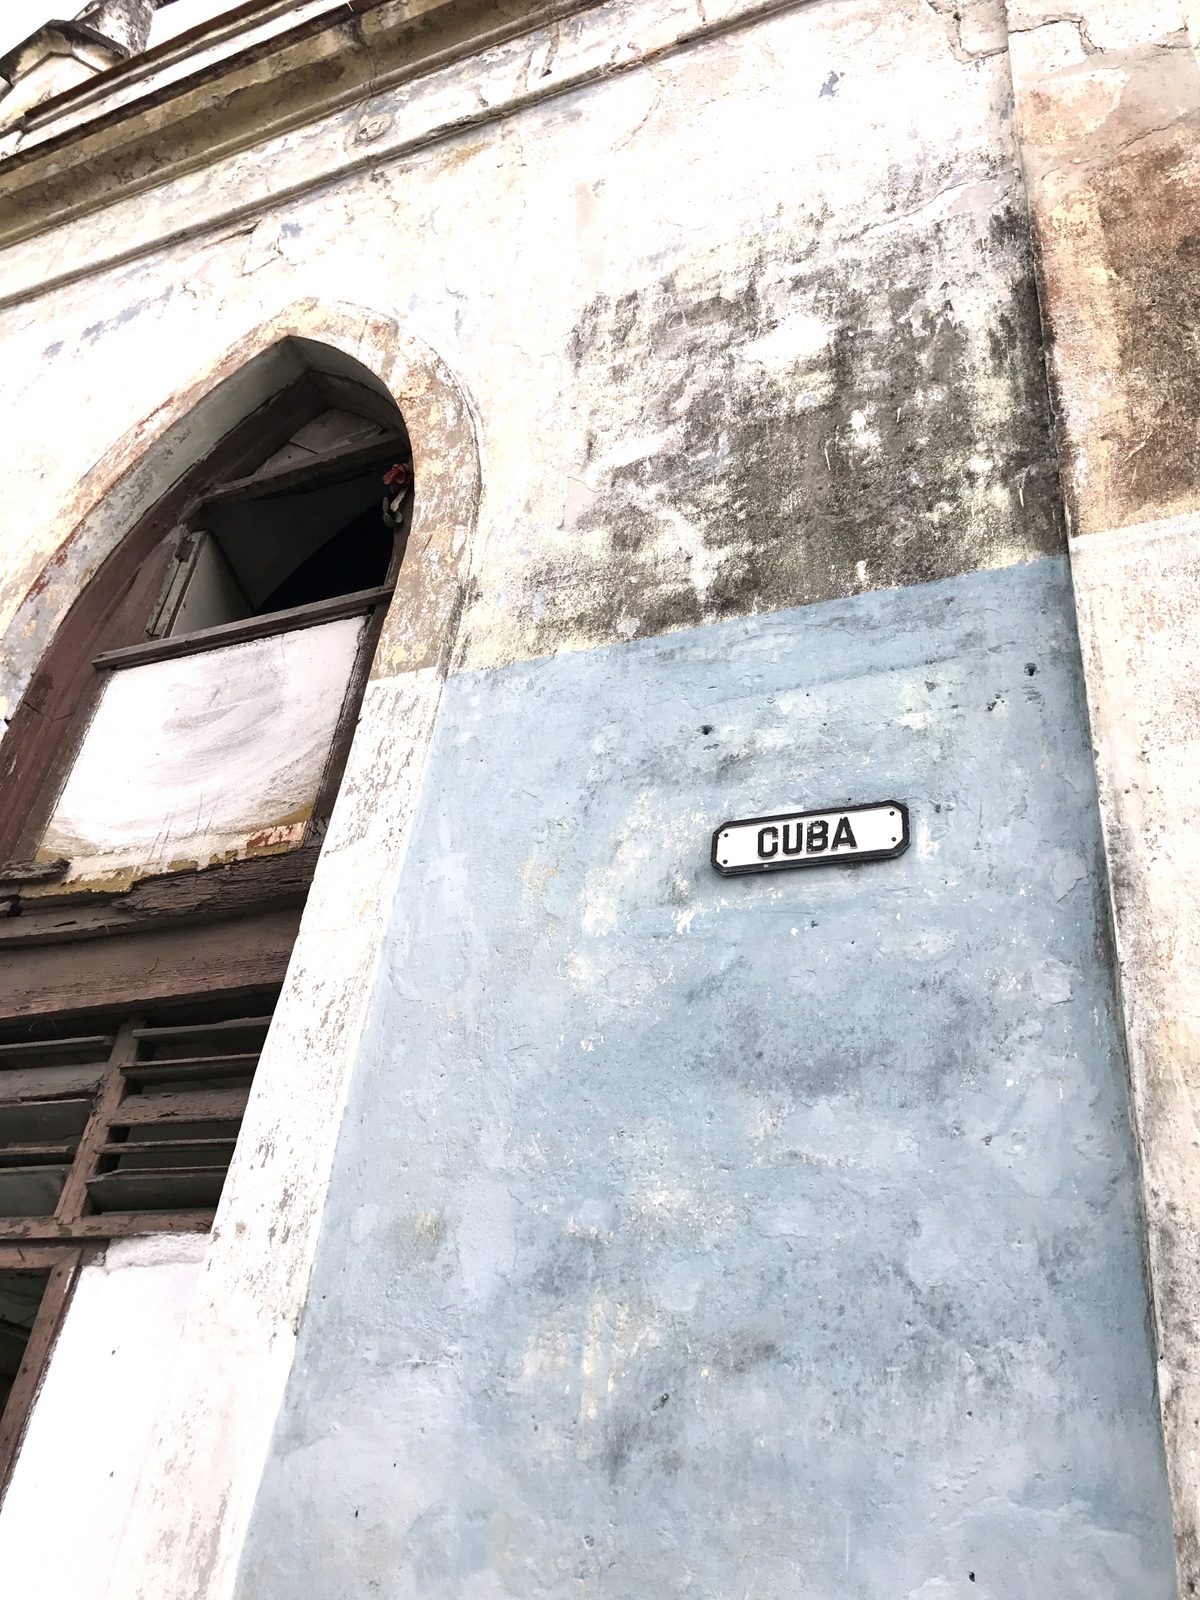 habana cuba street sign